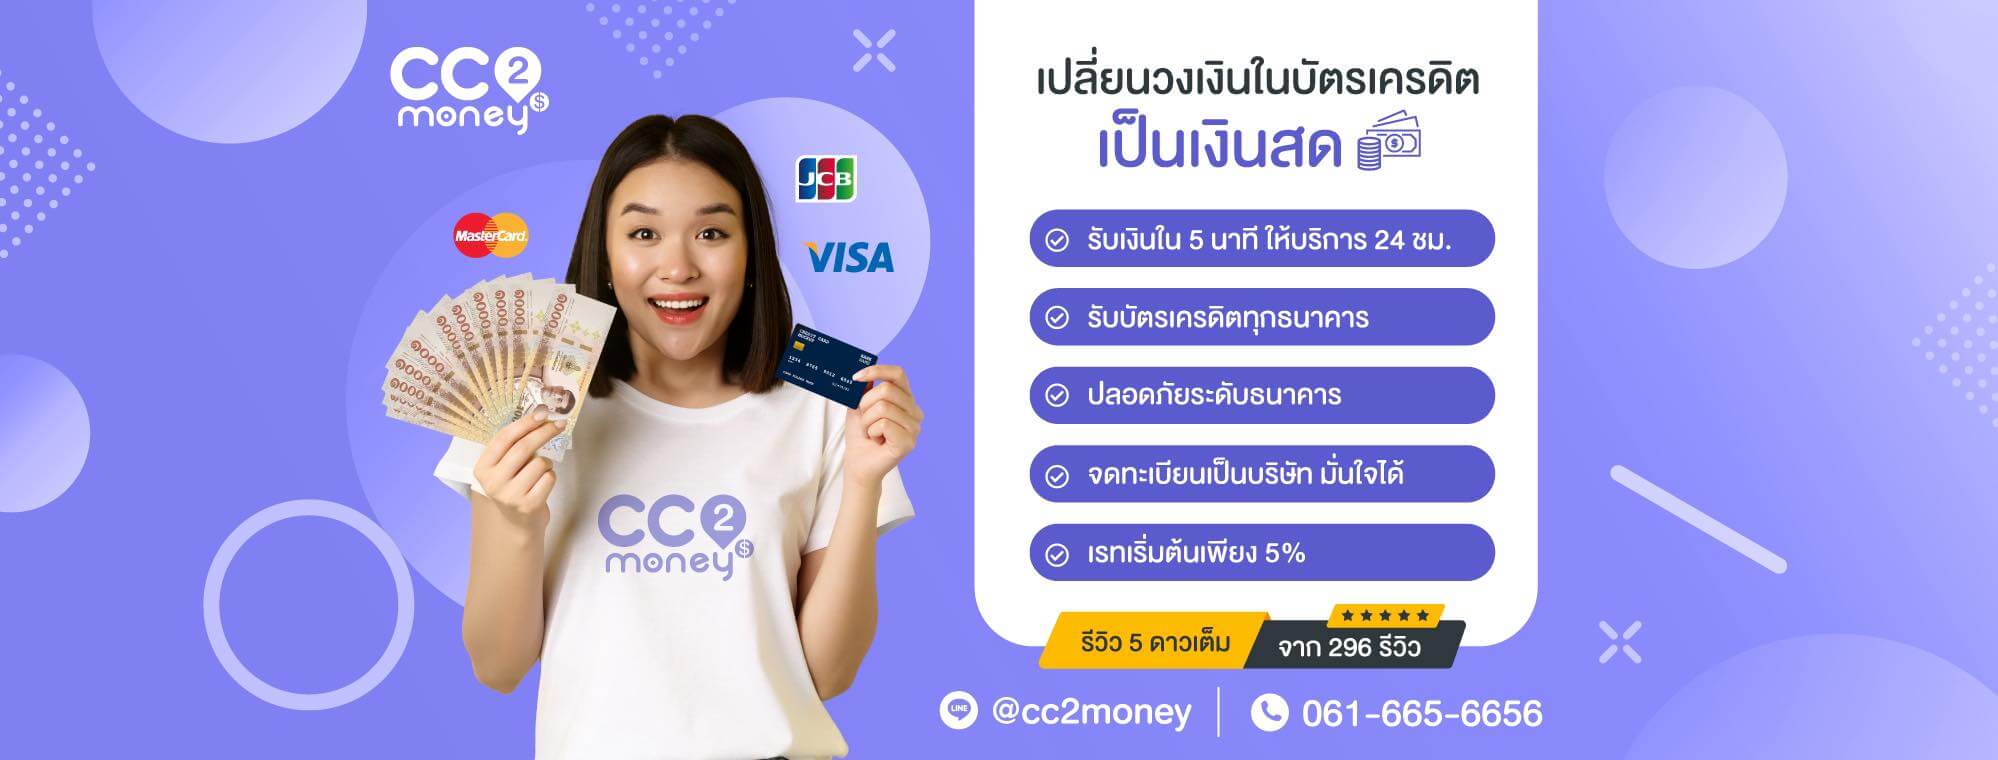 Cc2money รับรูดบัตรเครดิตเป็นเงินสด รับรูดบัตรเครดิต 